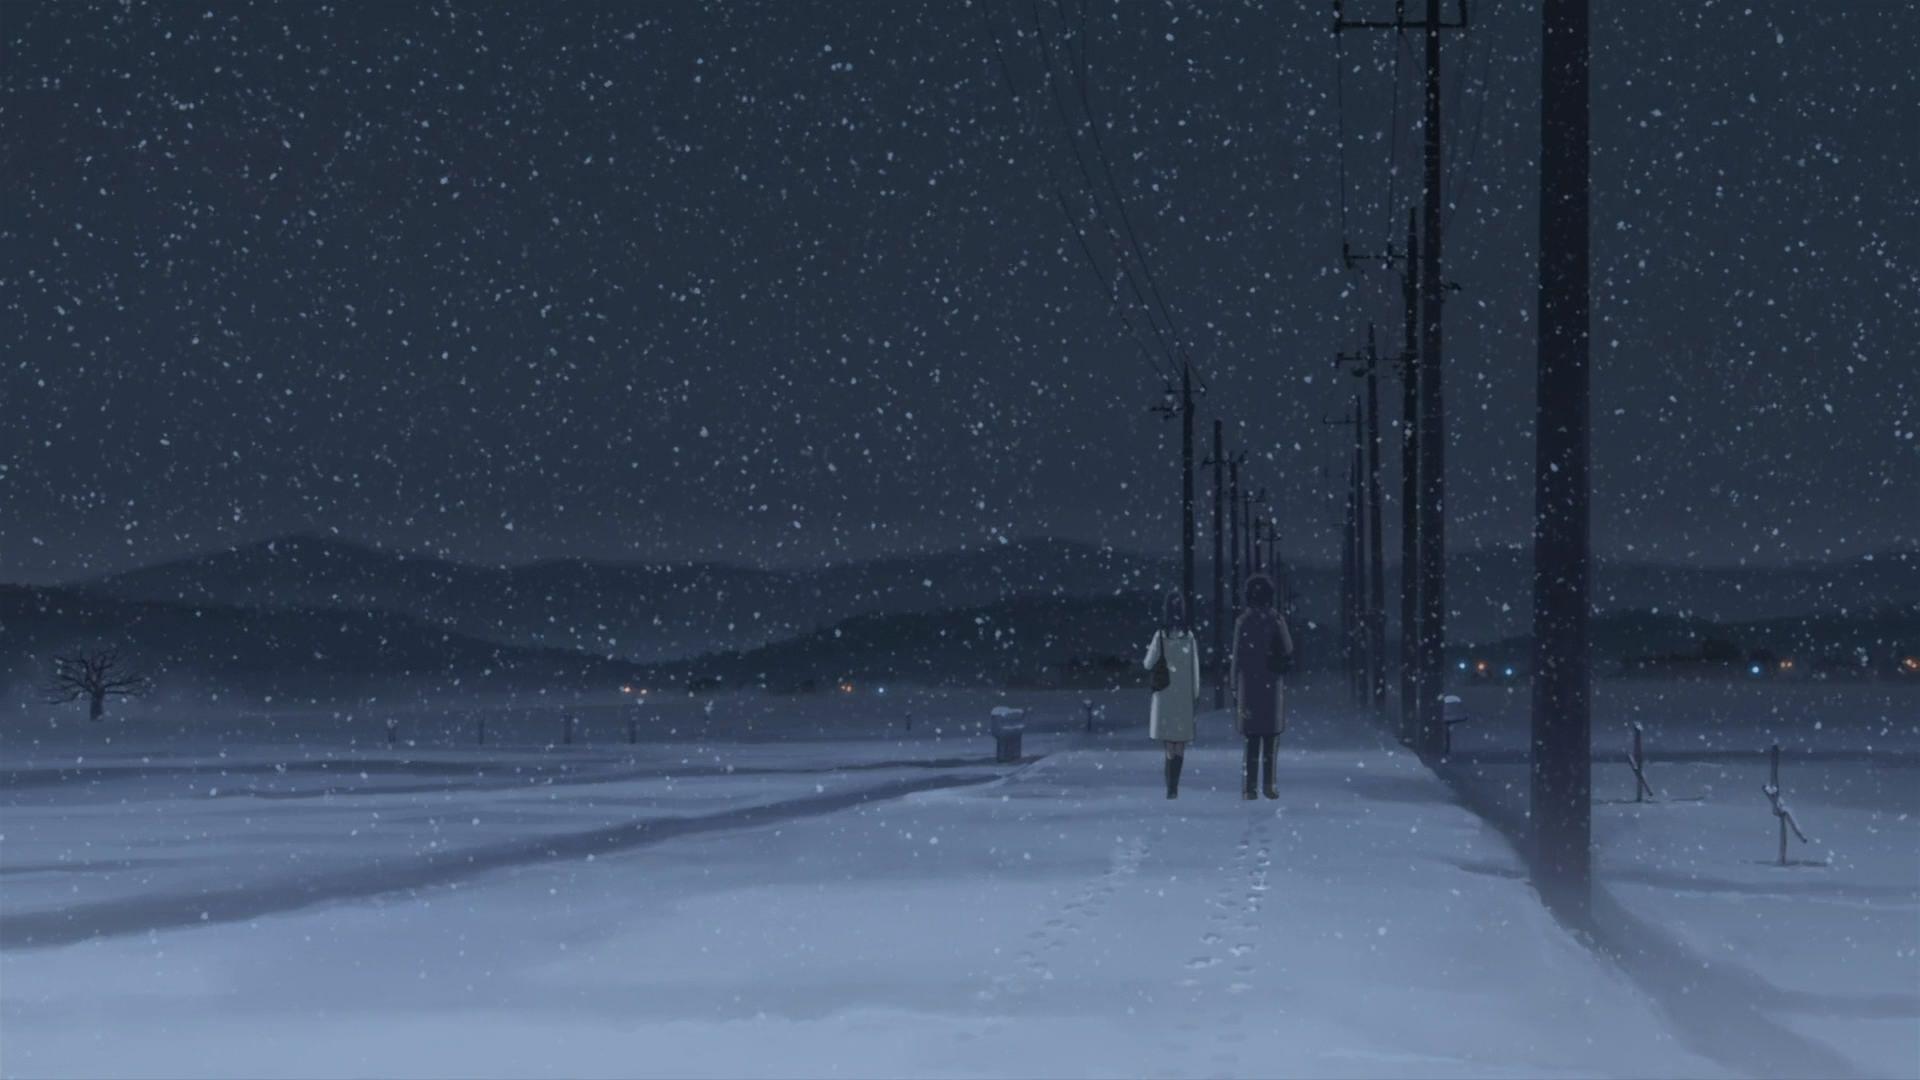 Anime Winter Scenery Wallpaper. Scenery wallpaper, Winter scenery, Scenery